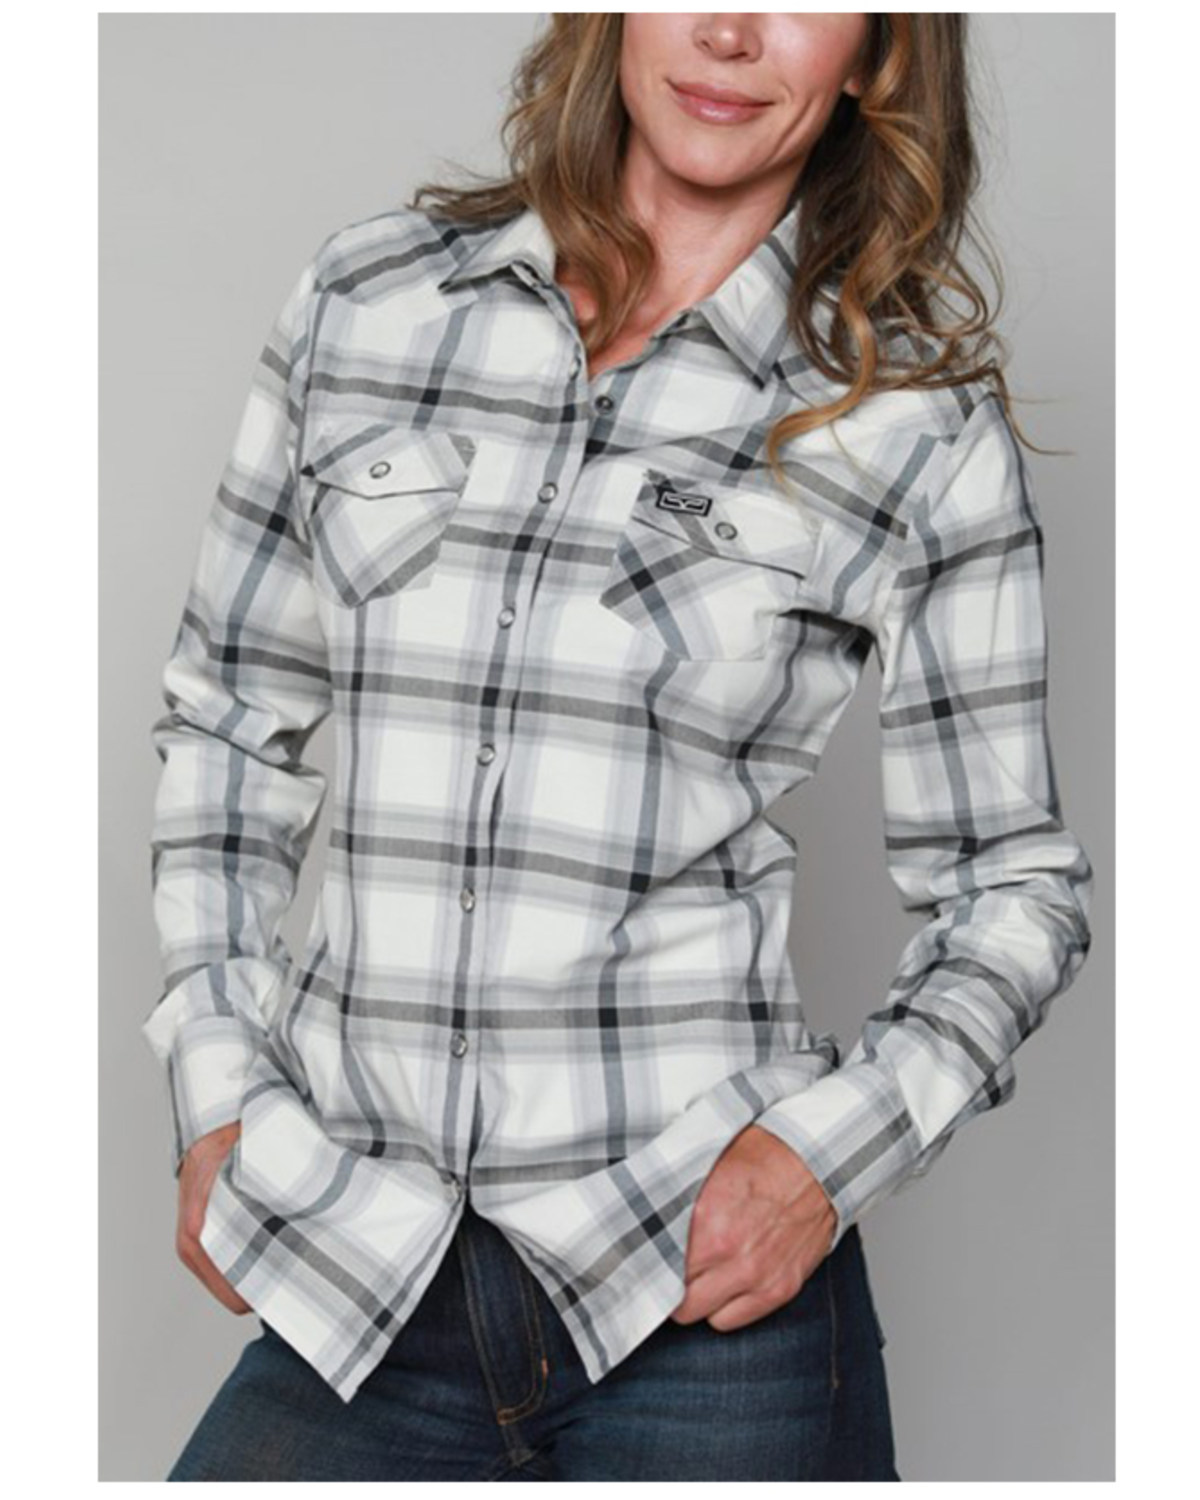 Kimes Ranch Women's Matadora Plaid Print Long Sleeve Western Snap Shirt